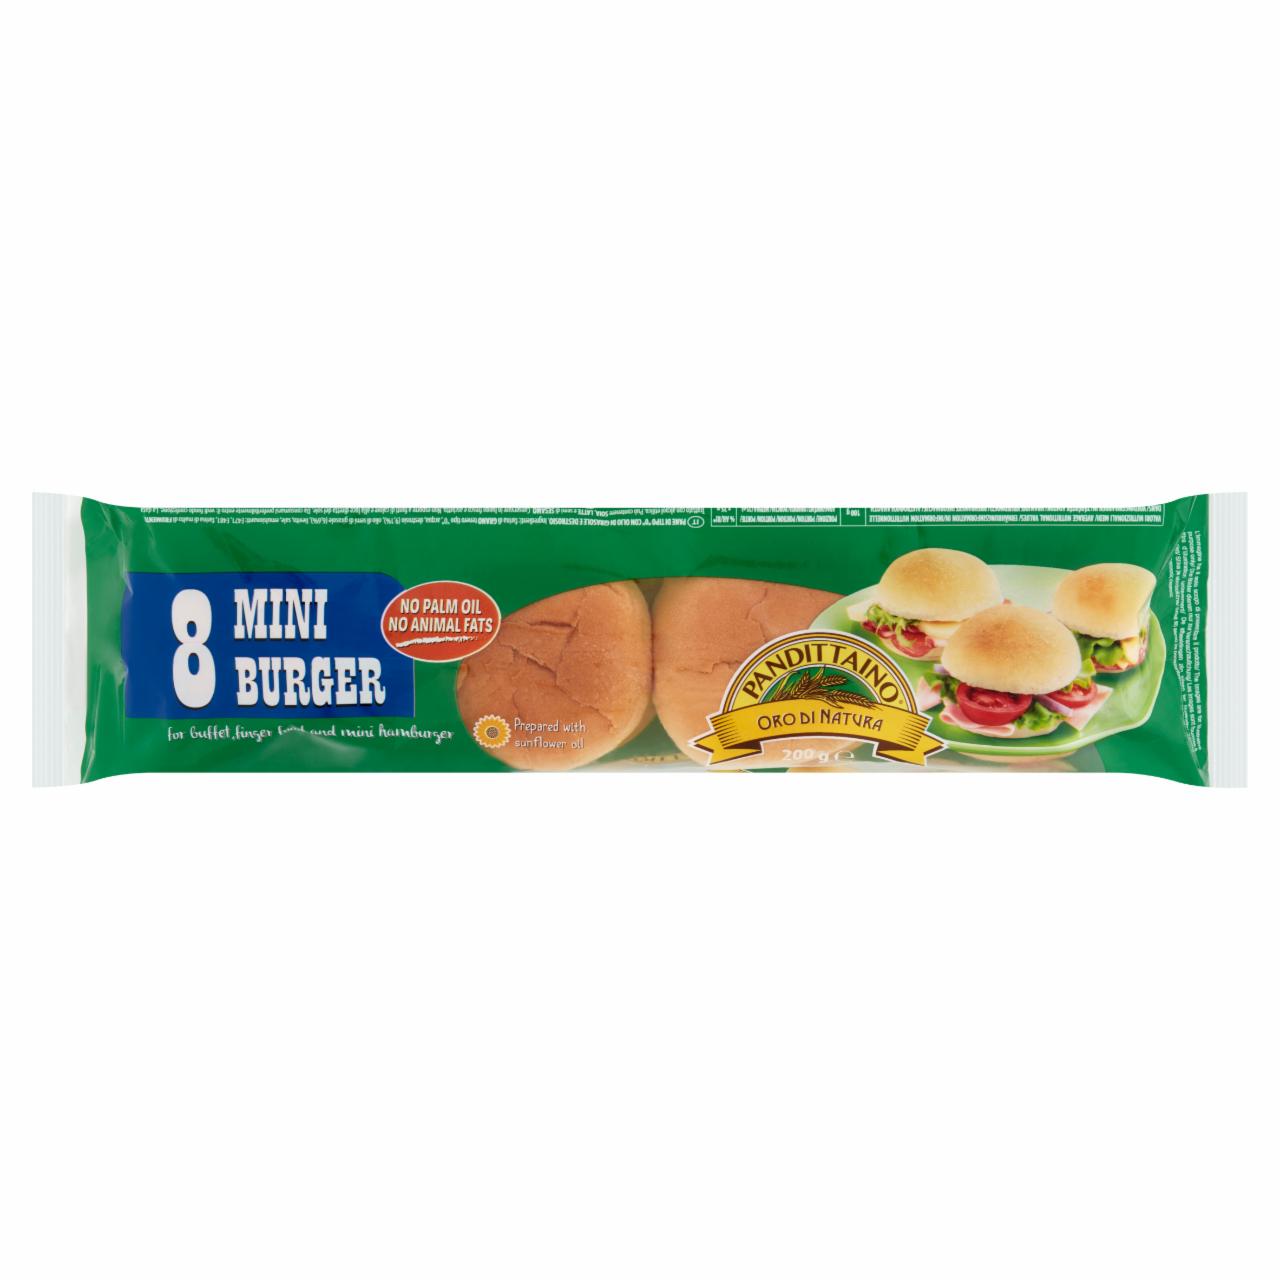 Képek - Pandittaino mini hamburger zsemle 8 db 200 g